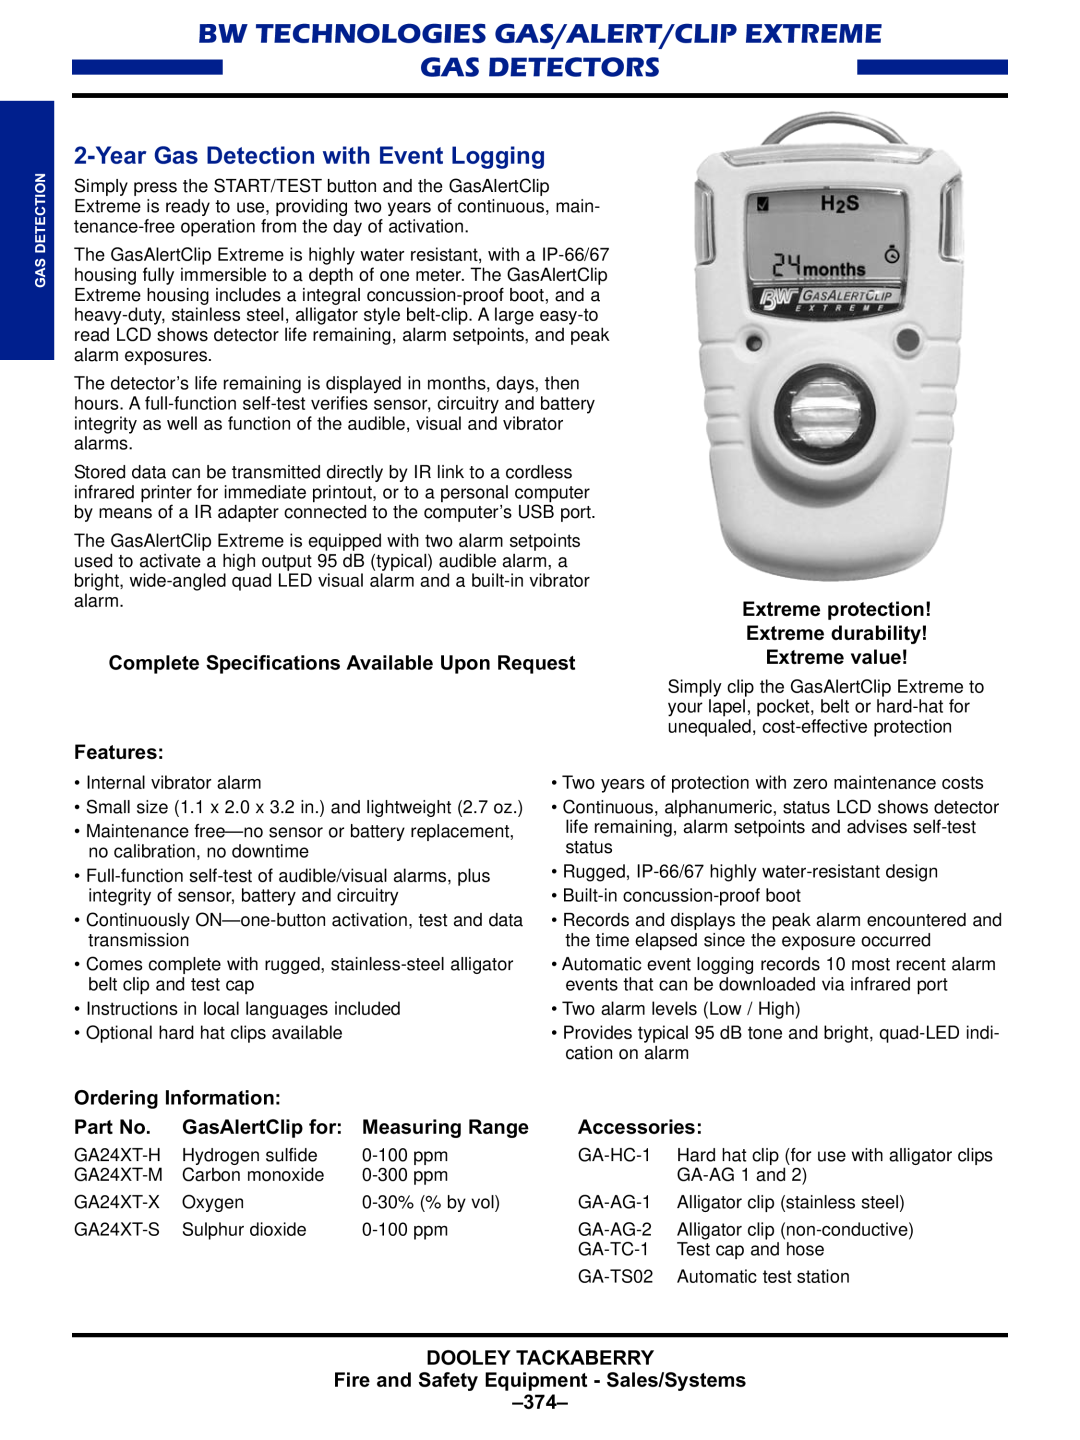 Black & Decker MULTI-GAS DETECTORS manual Bw Technologies Gas/Alert/Clip Extreme, Gas Detectors 